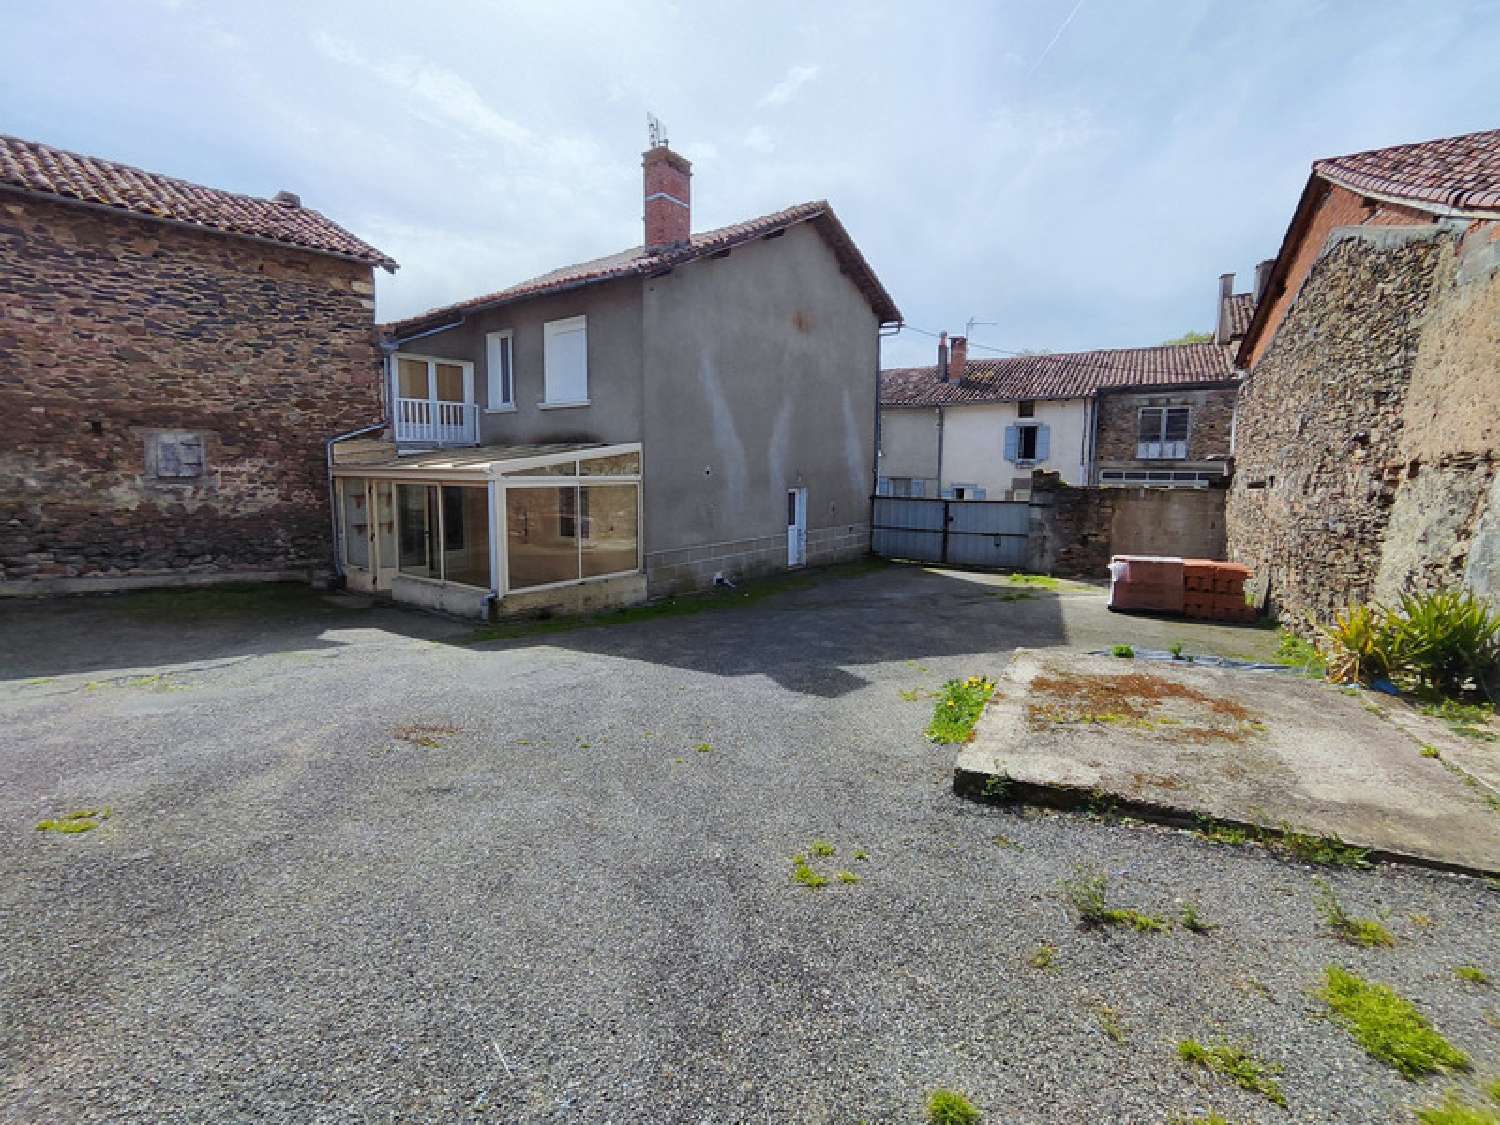  à vendre maison Saulgond Charente 2